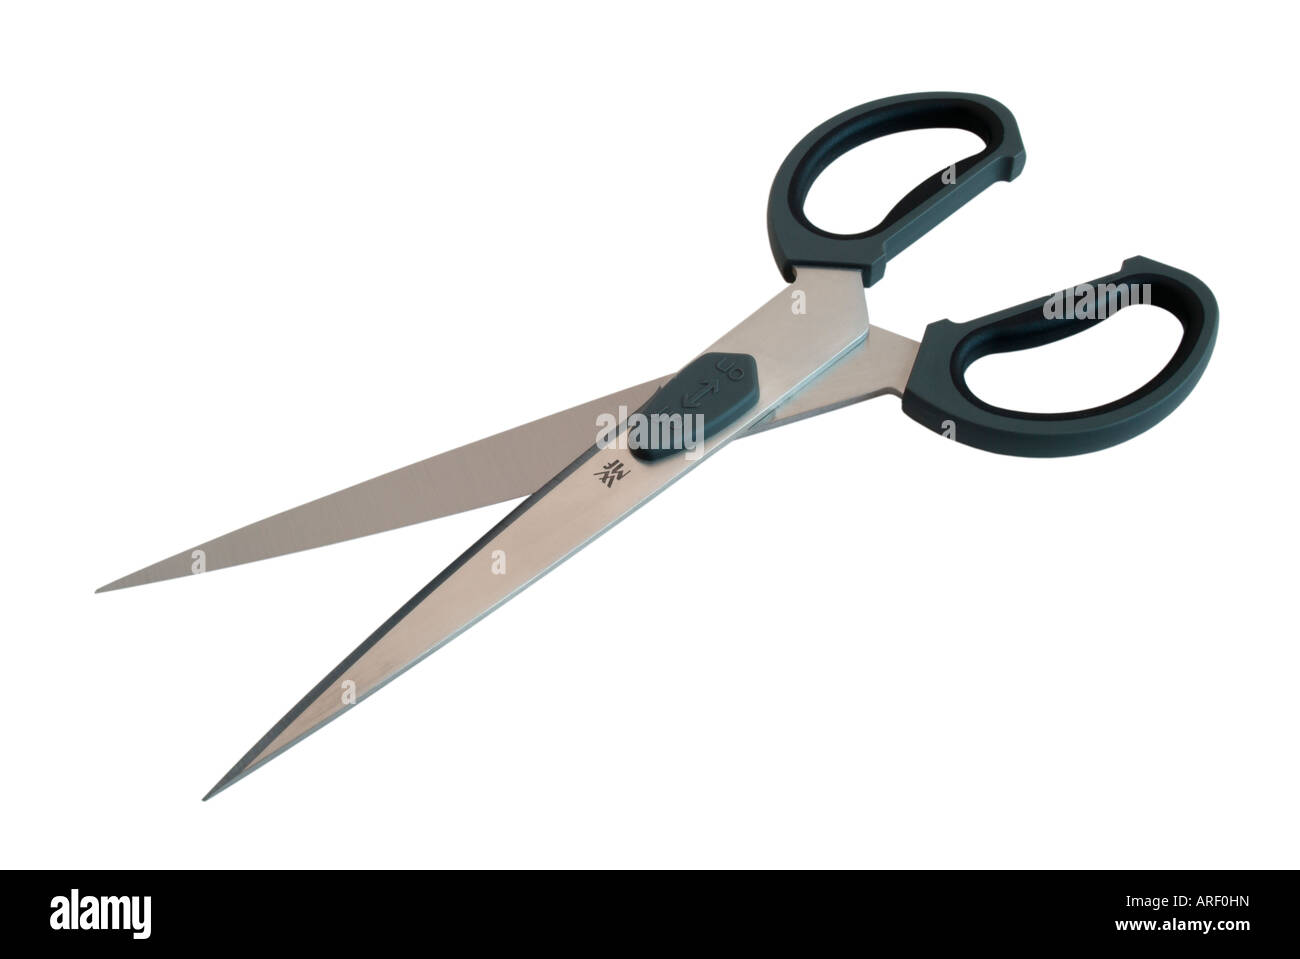 Japanese Sewing Scissors Vtg Iron Small Thread Trimmer Scissors T96, Online Shop